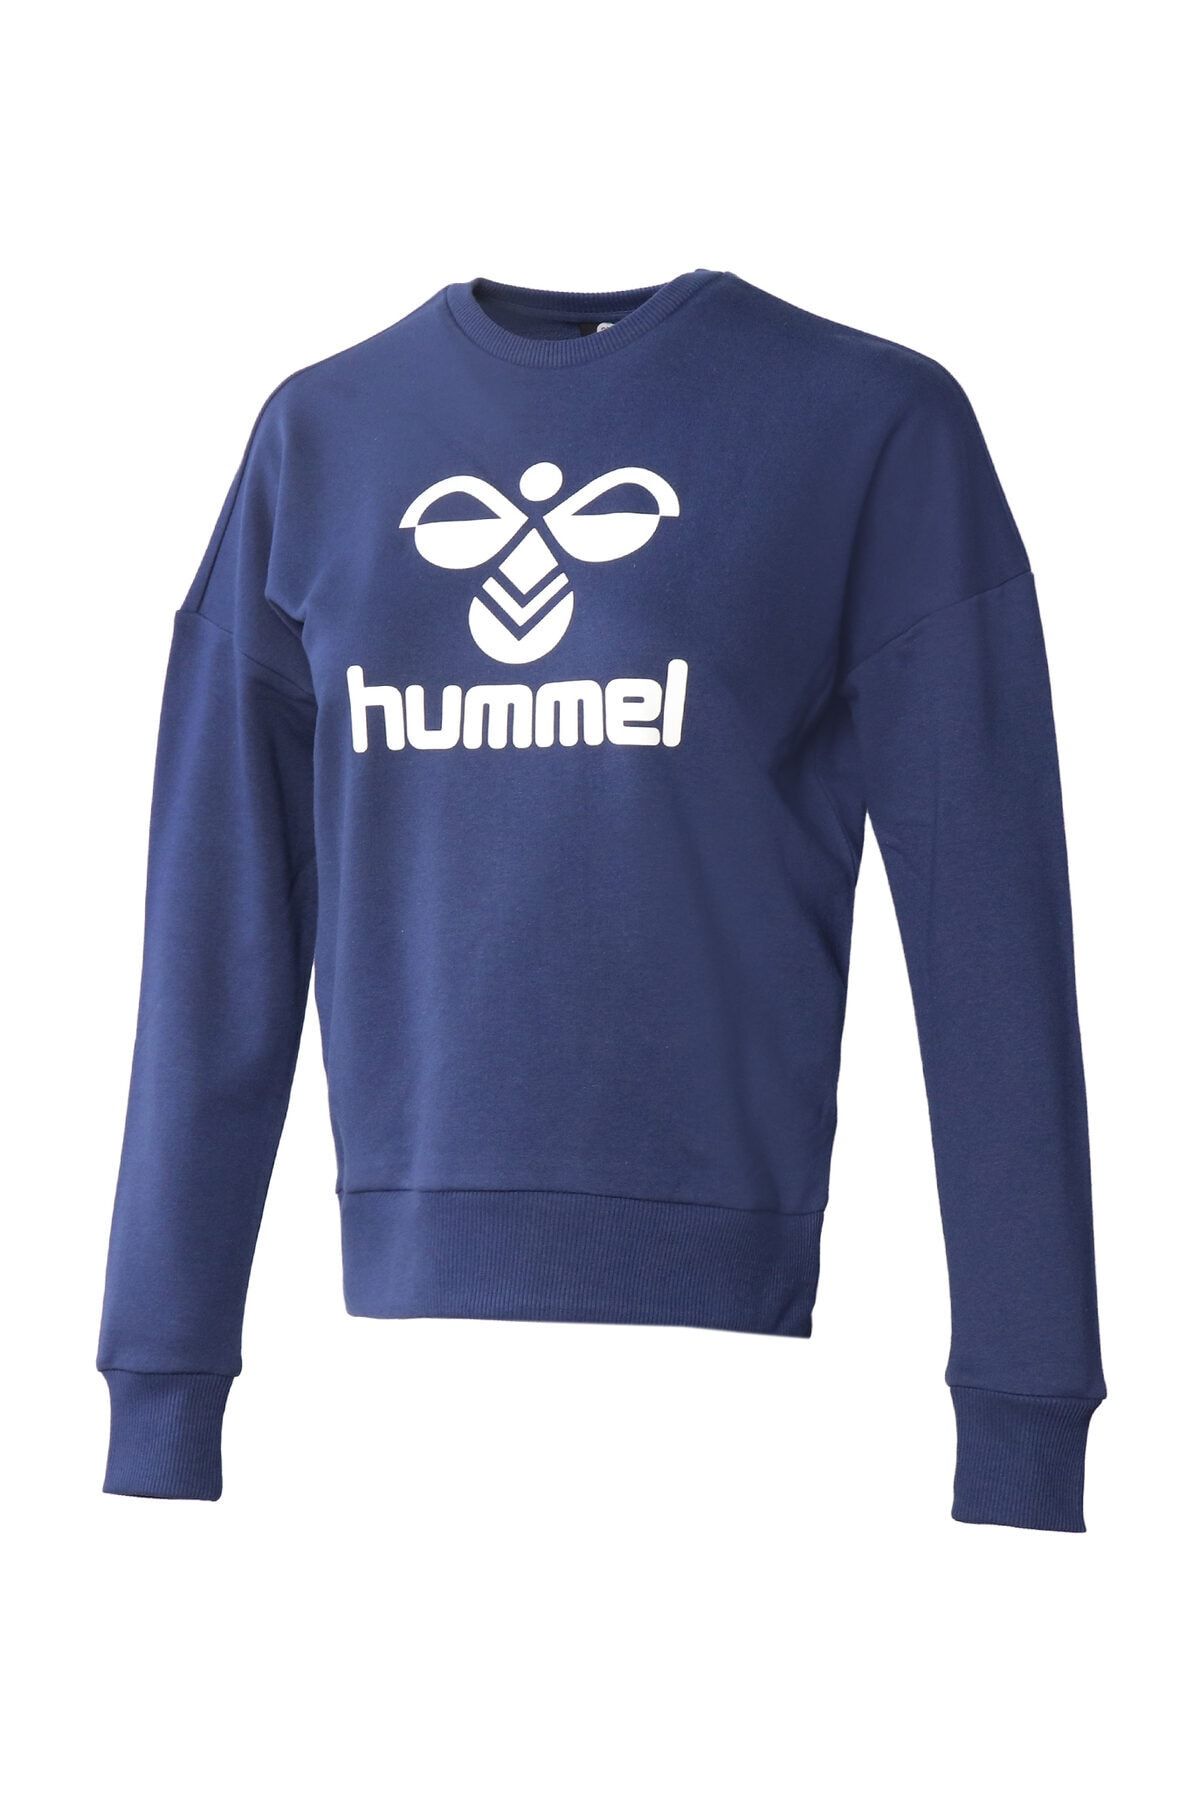 hummel Helsinge - Lacivert Kadın Sweatshirt